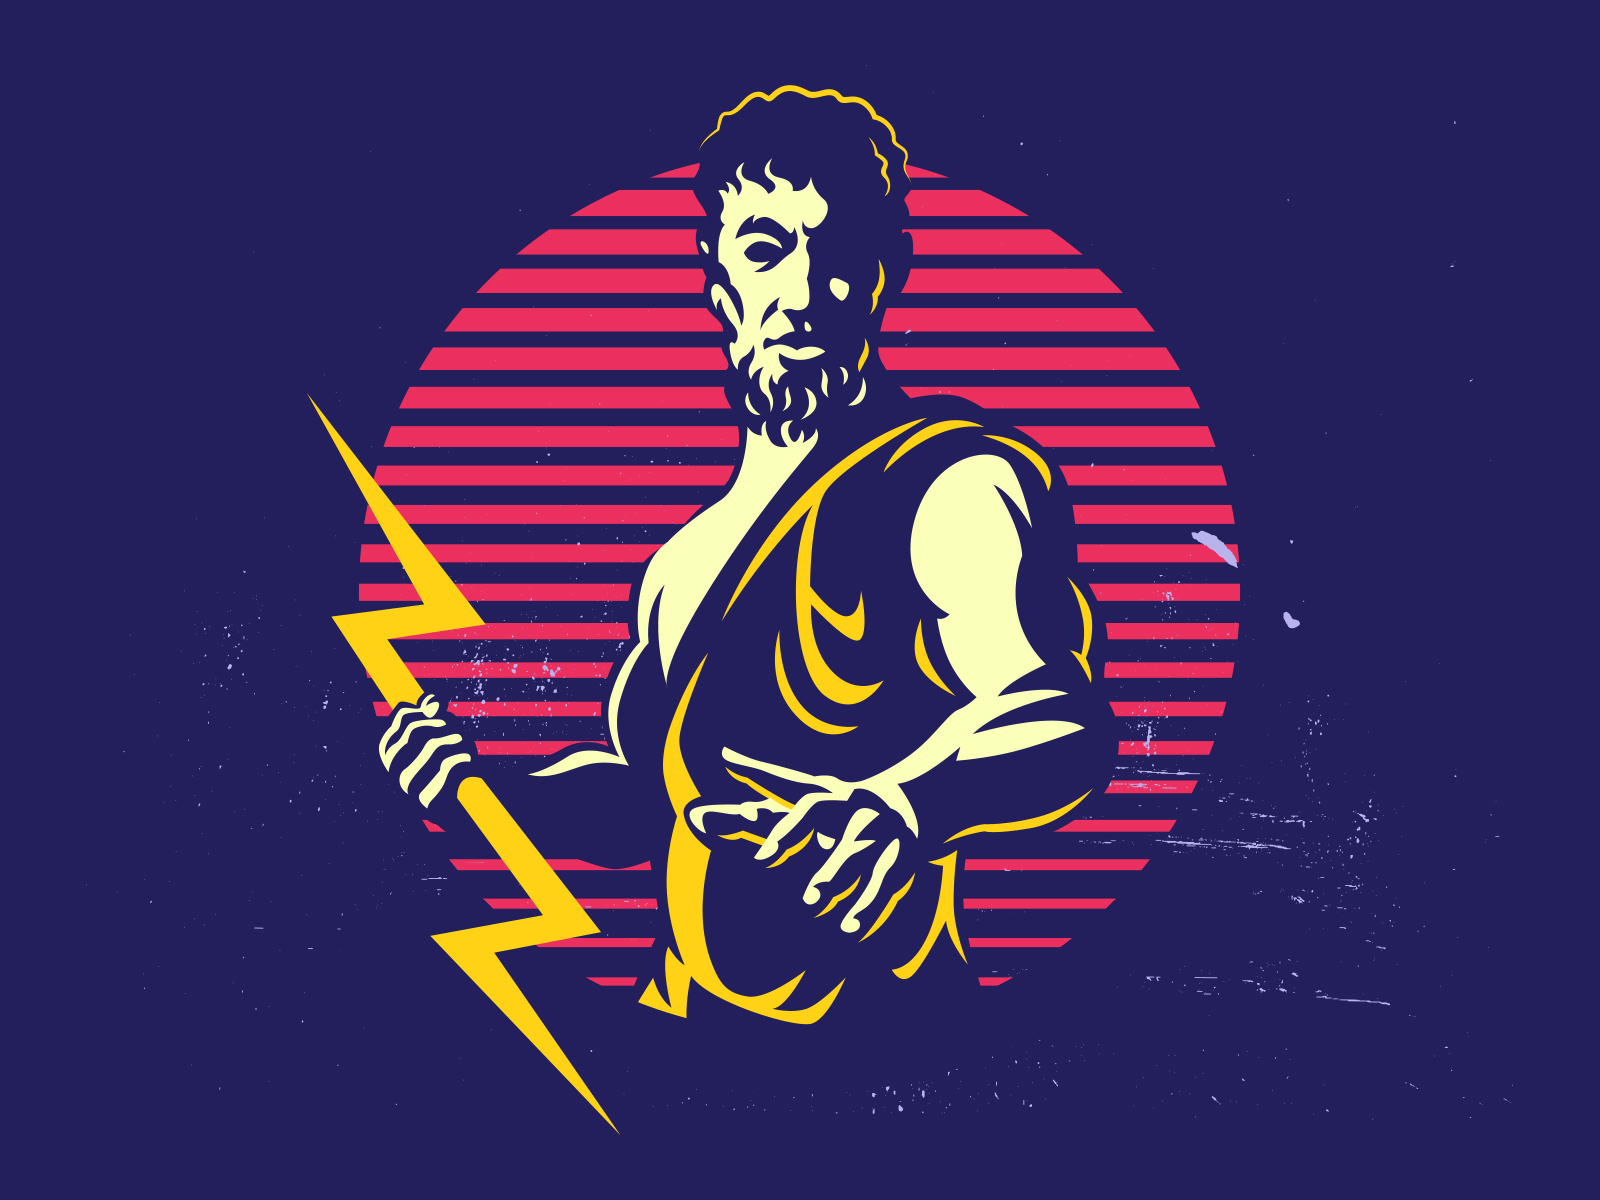 Zeus Hold Lightning Bolt Logo by Rahmad Kurniawan on Dribbble